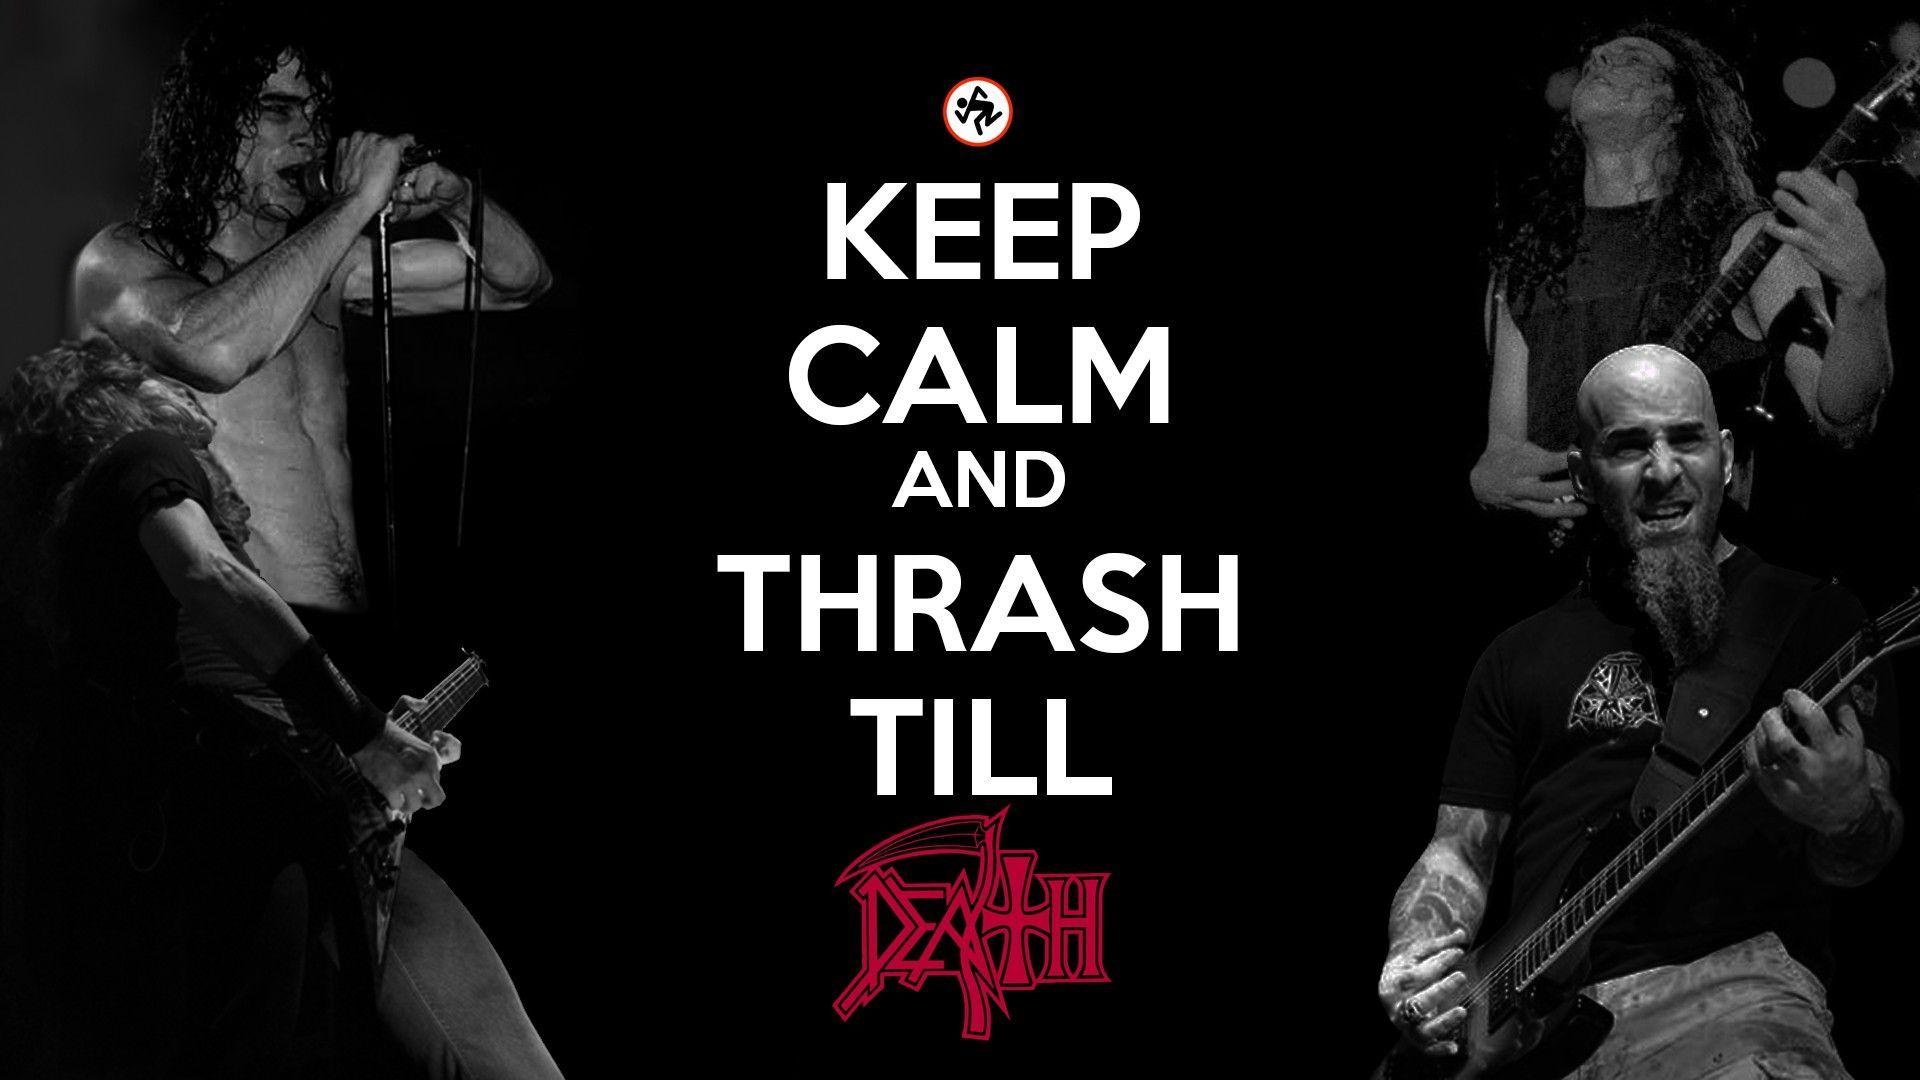 Thrash Metal Wallpaper. Megadeth Dave Mustaine Thrash Metal Big